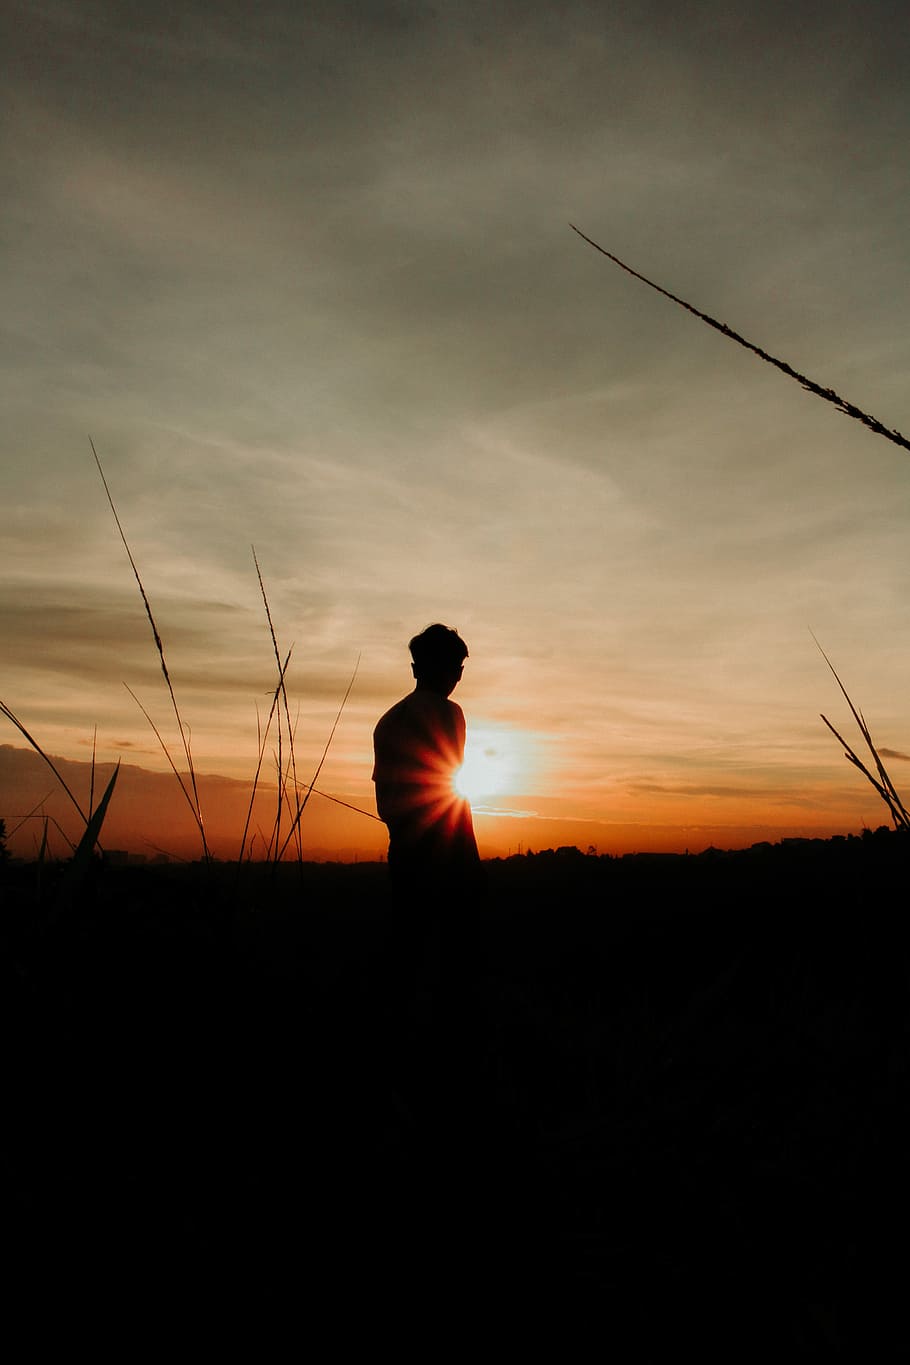 silhouette of person near grass at golden hour, man standing on grass field